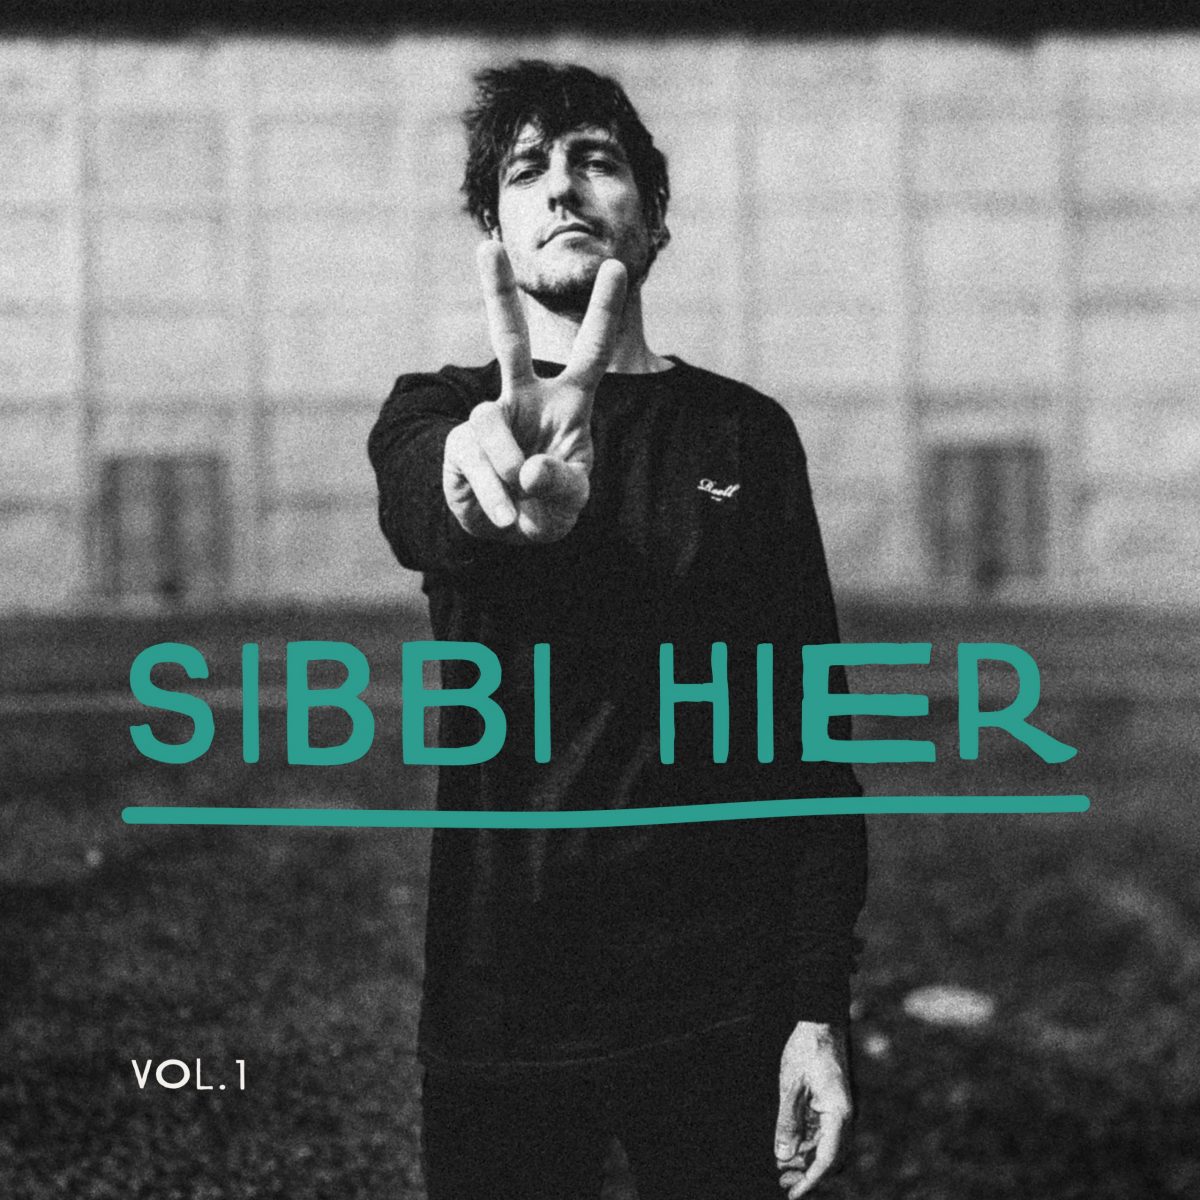 sibbi-hier-vol-1-album-review